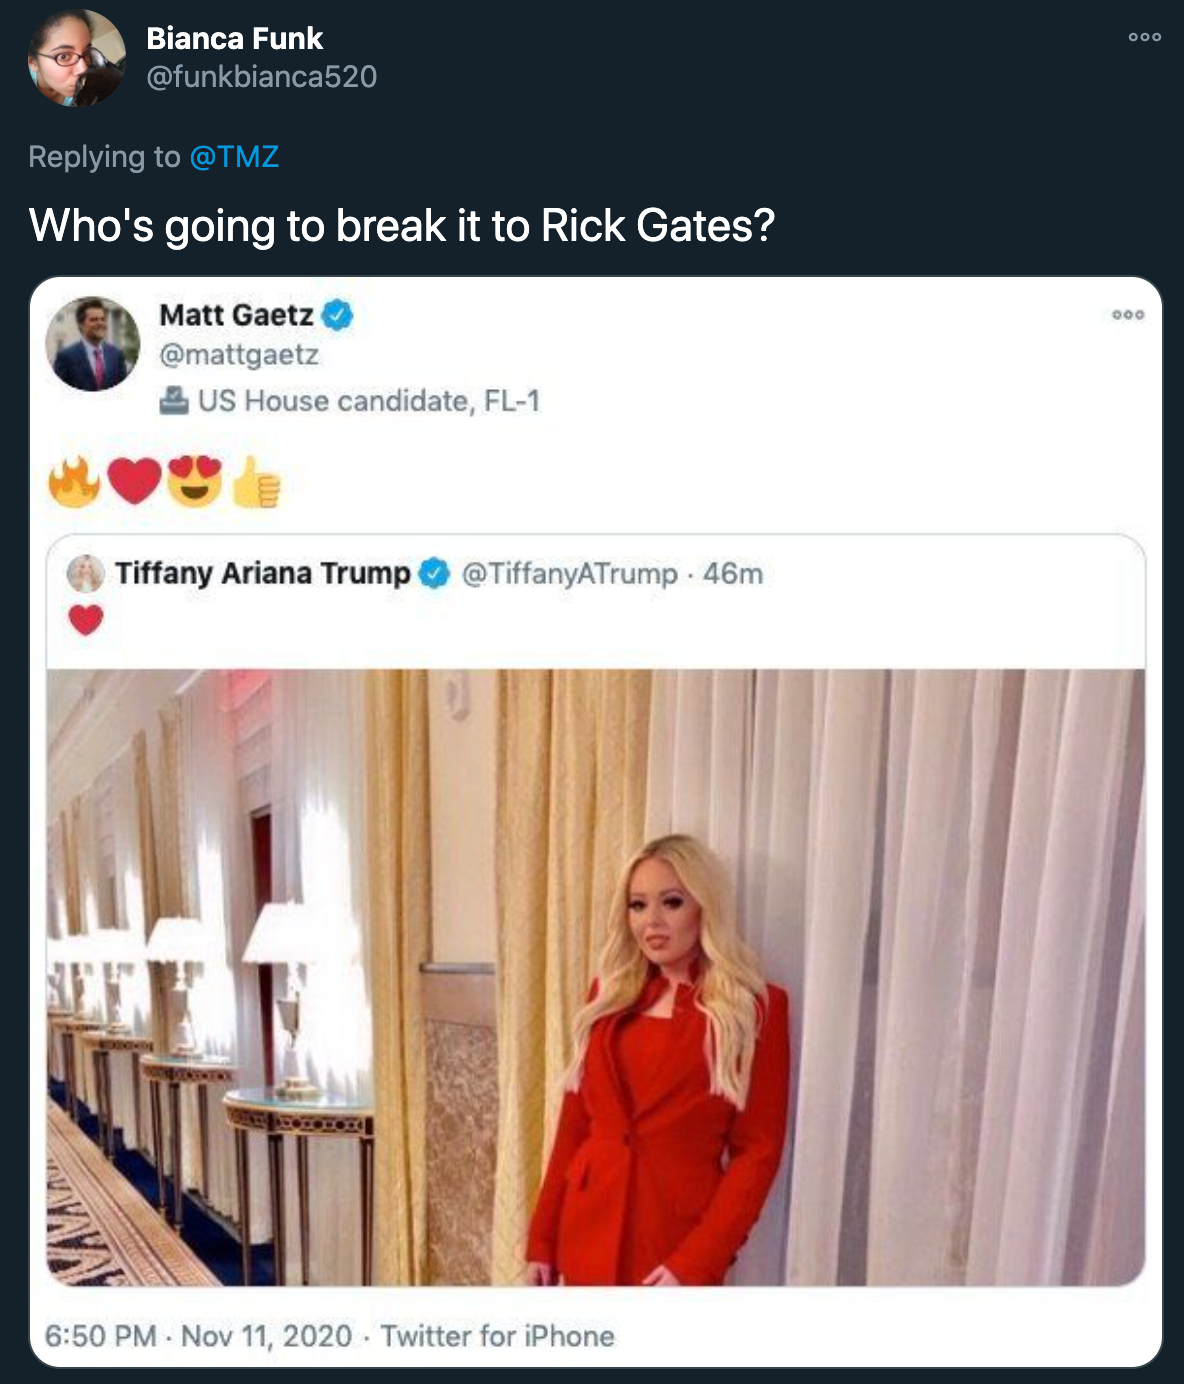 tiffany trump engagement - Who's going to break it to Rick Gates? Matt Gaetz - Tiffany Ariana Trump